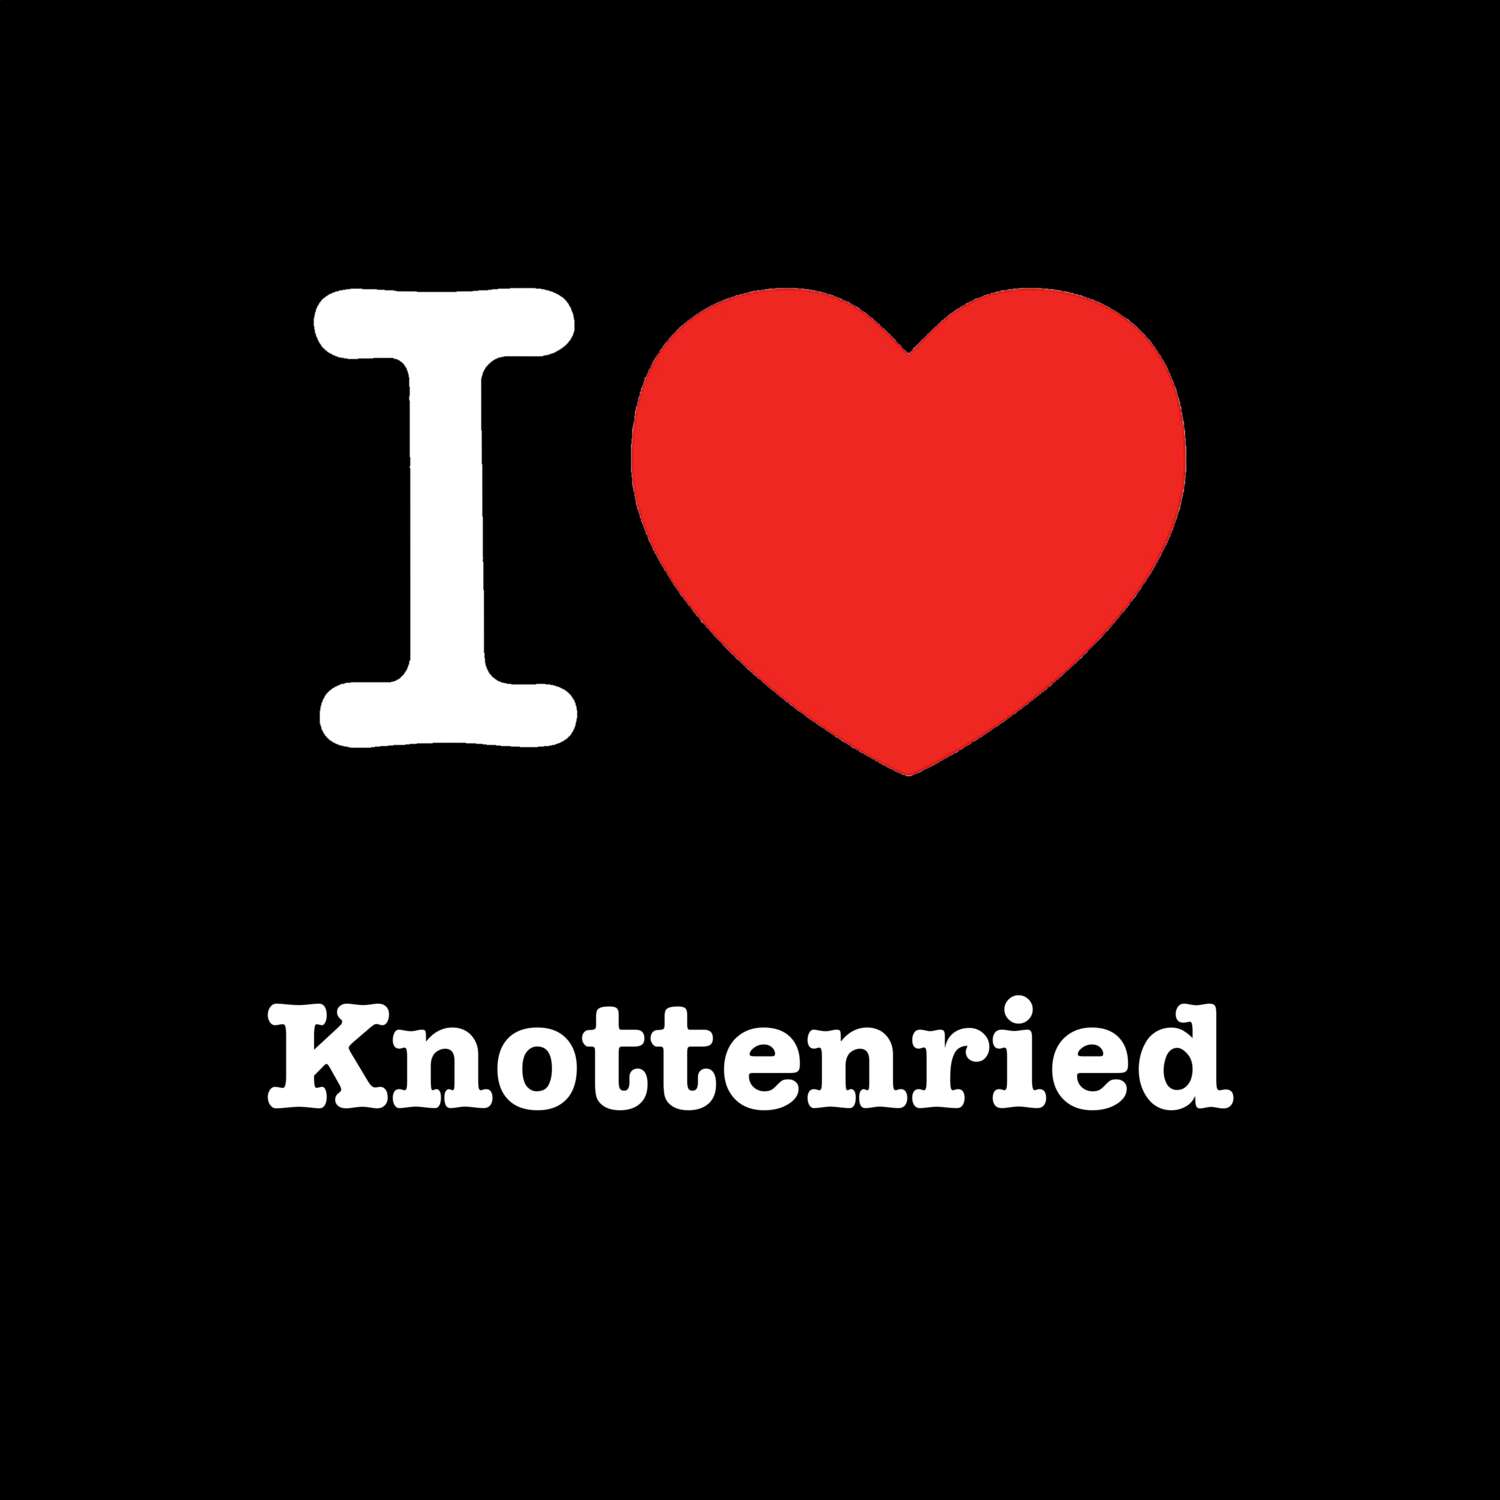 Knottenried T-Shirt »I love«